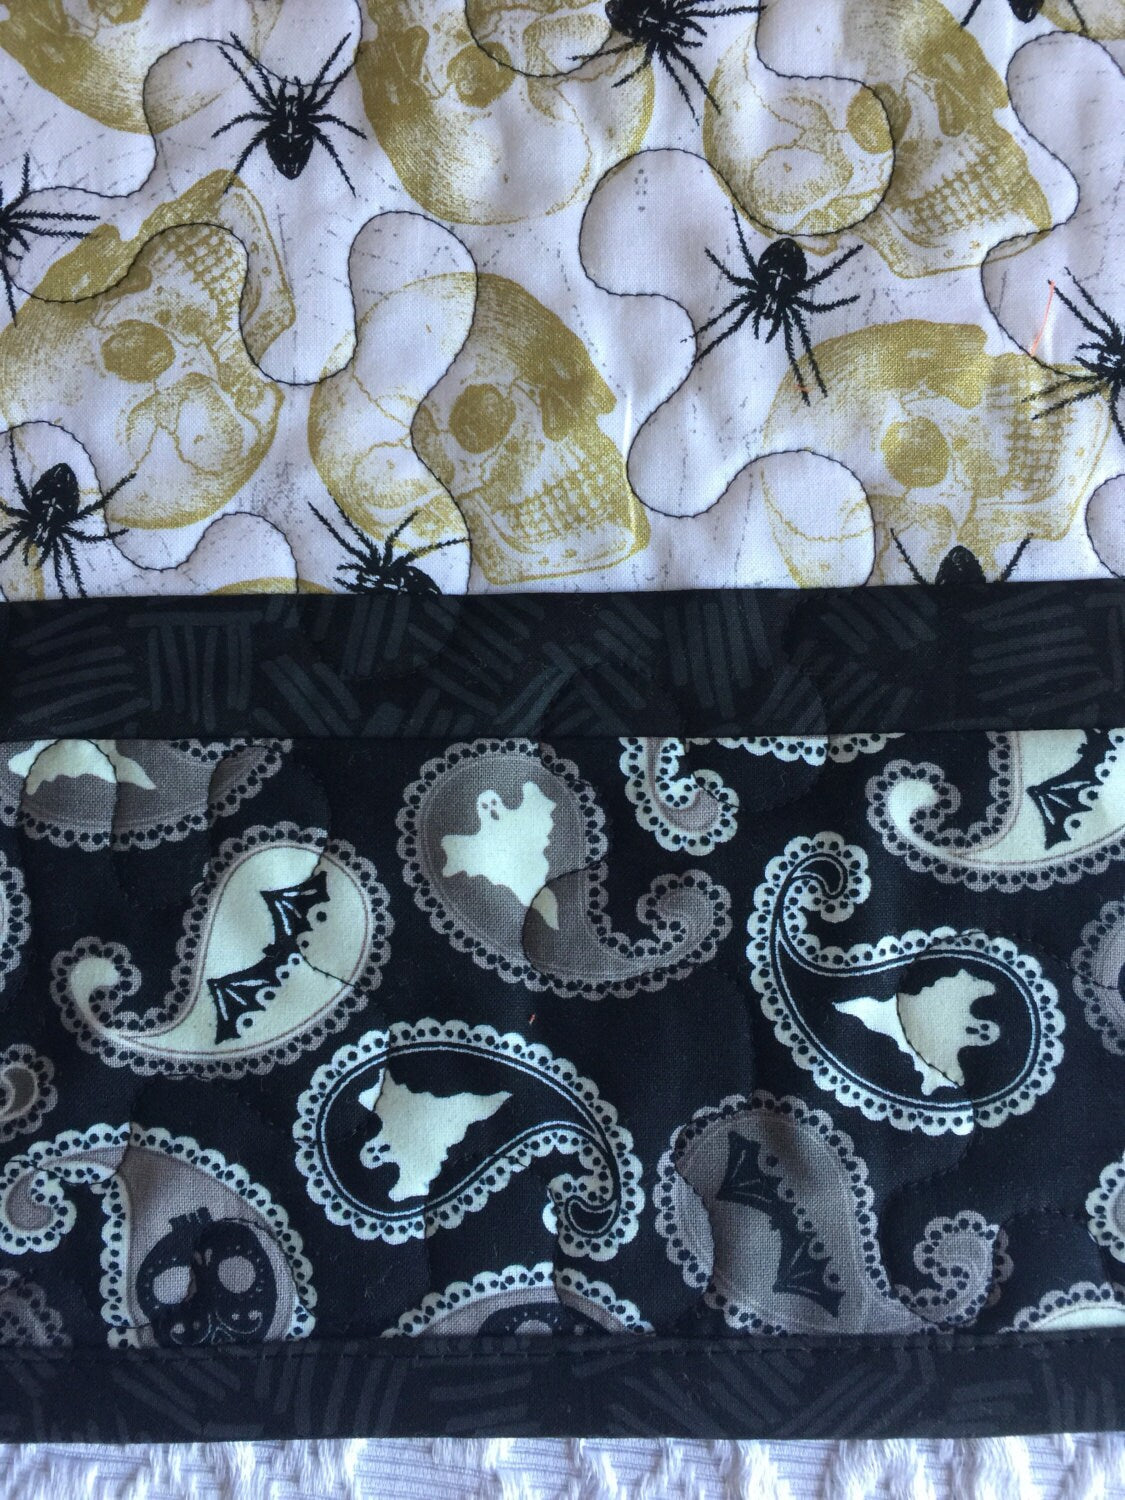 Halloween Table Runner Quilt, Spiders, Ghosts, Skulls Table Topper Quilt, Black, White, Glow in the Dark, Handmade